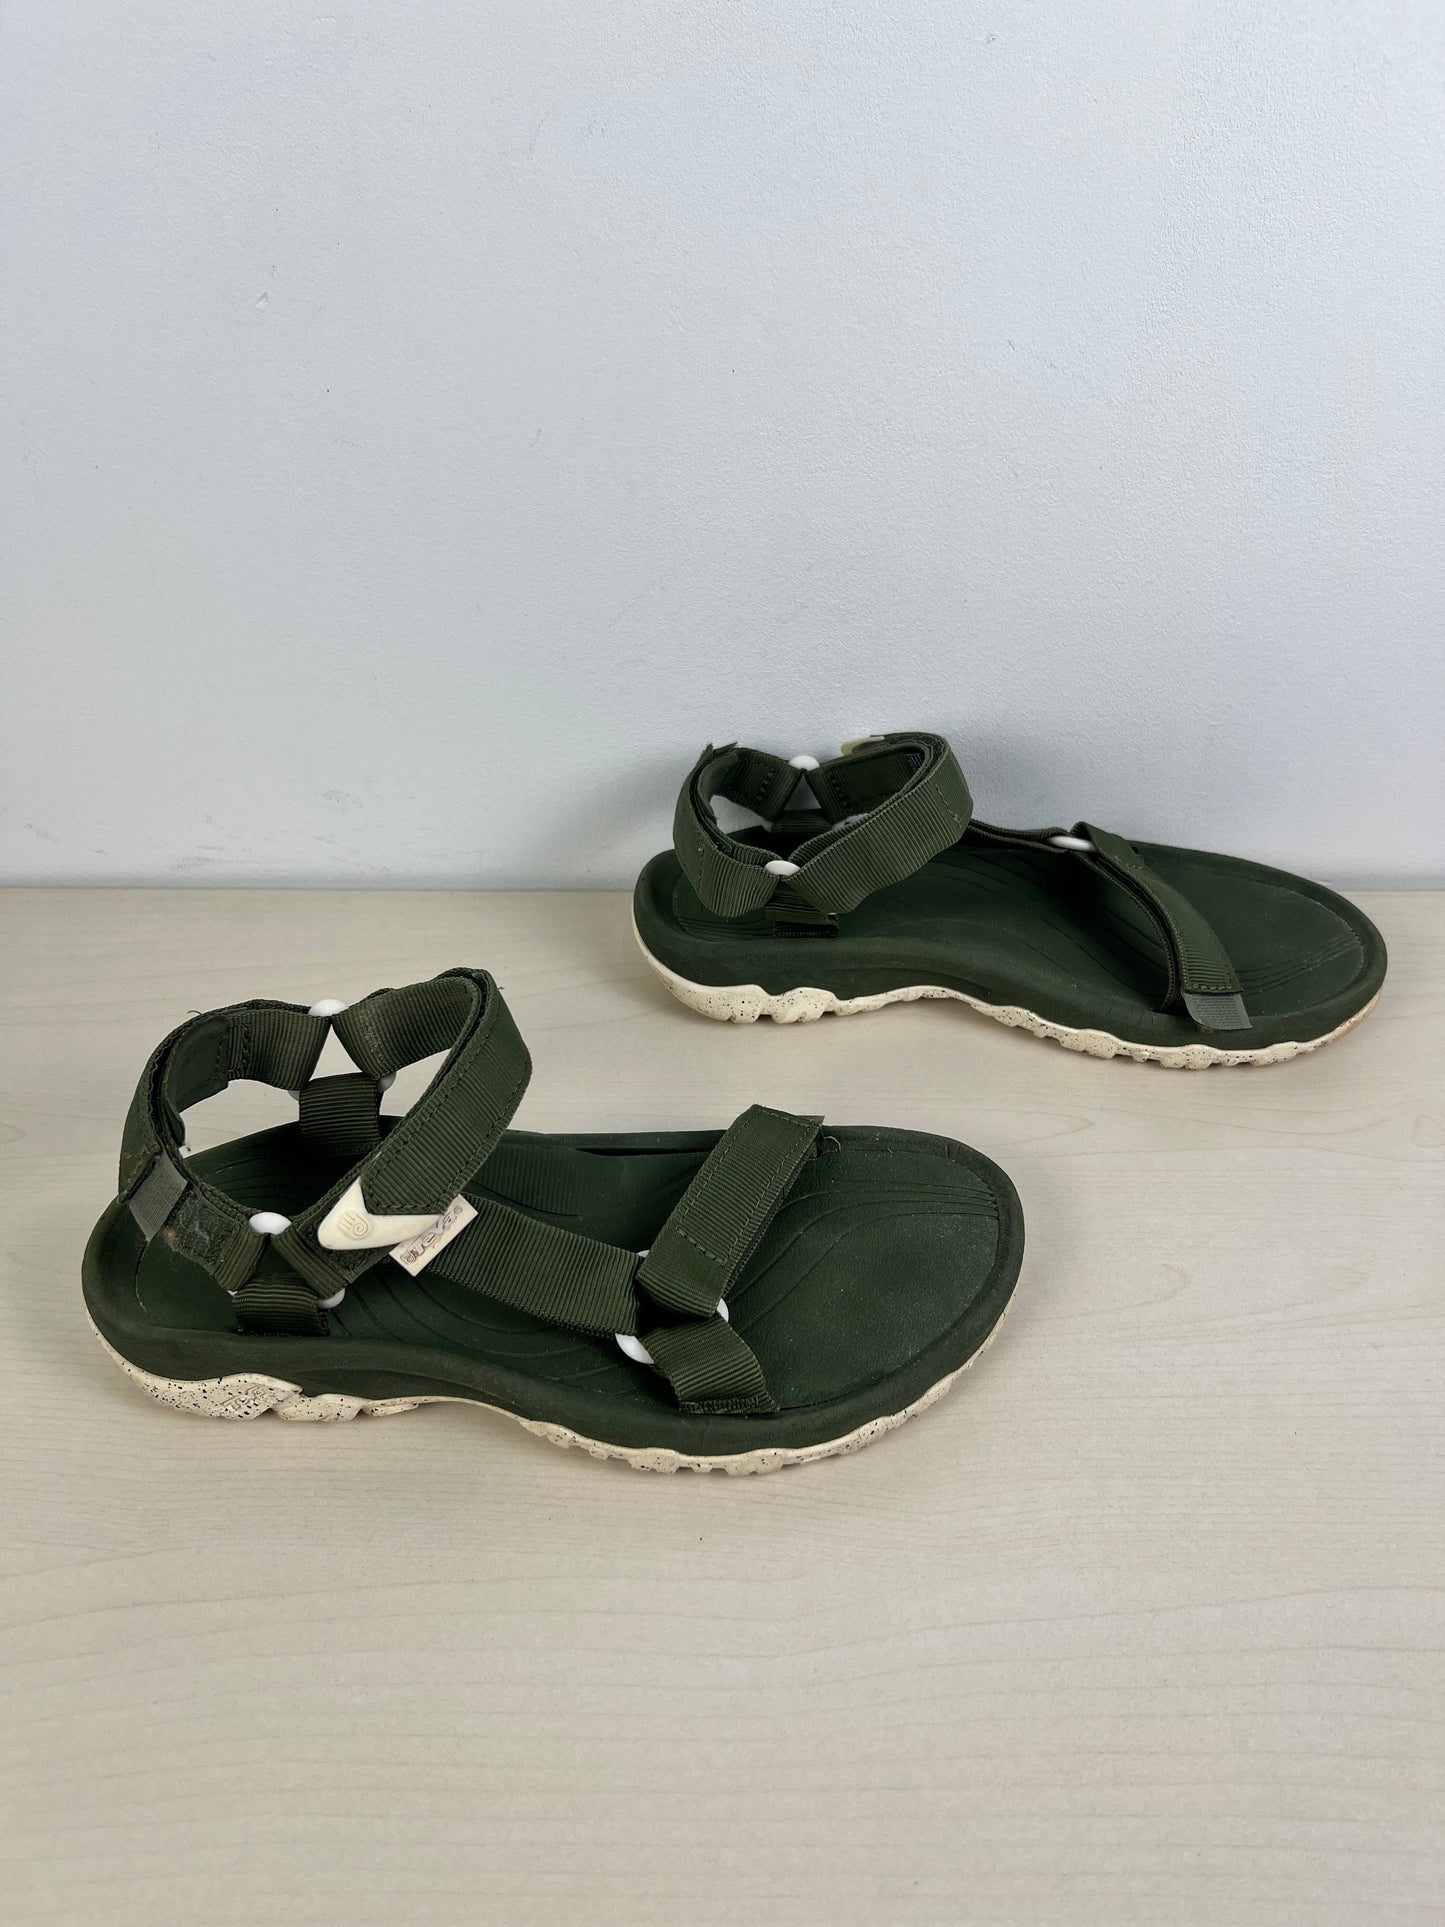 Green Sandals Sport Teva, Size 7